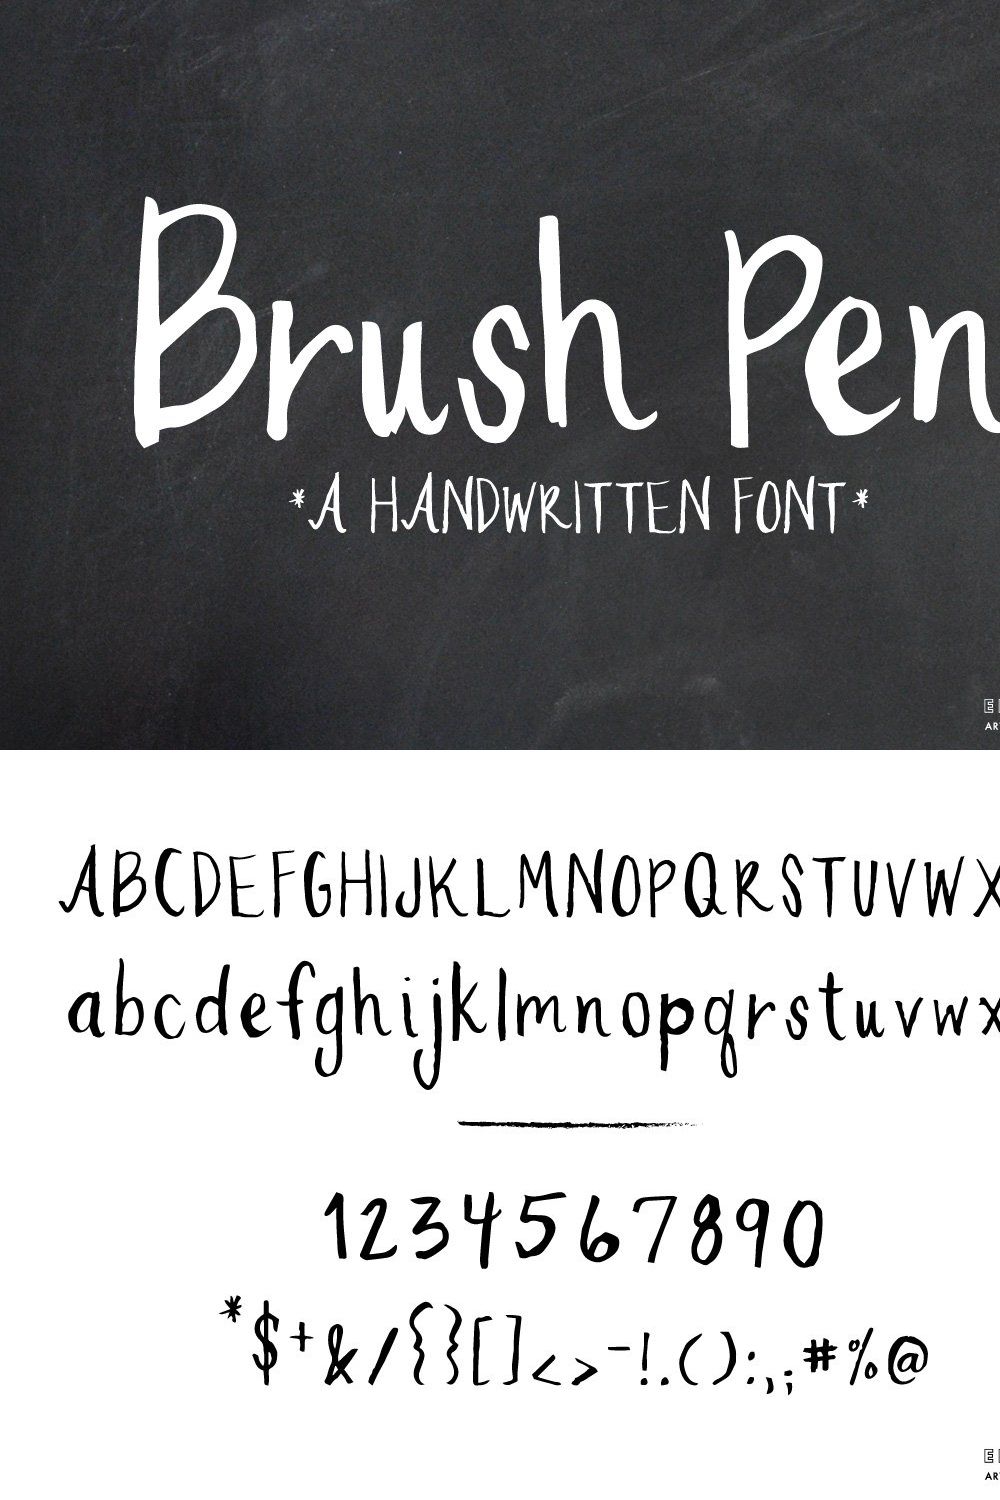 Brush Pen Handwritten Font pinterest preview image.